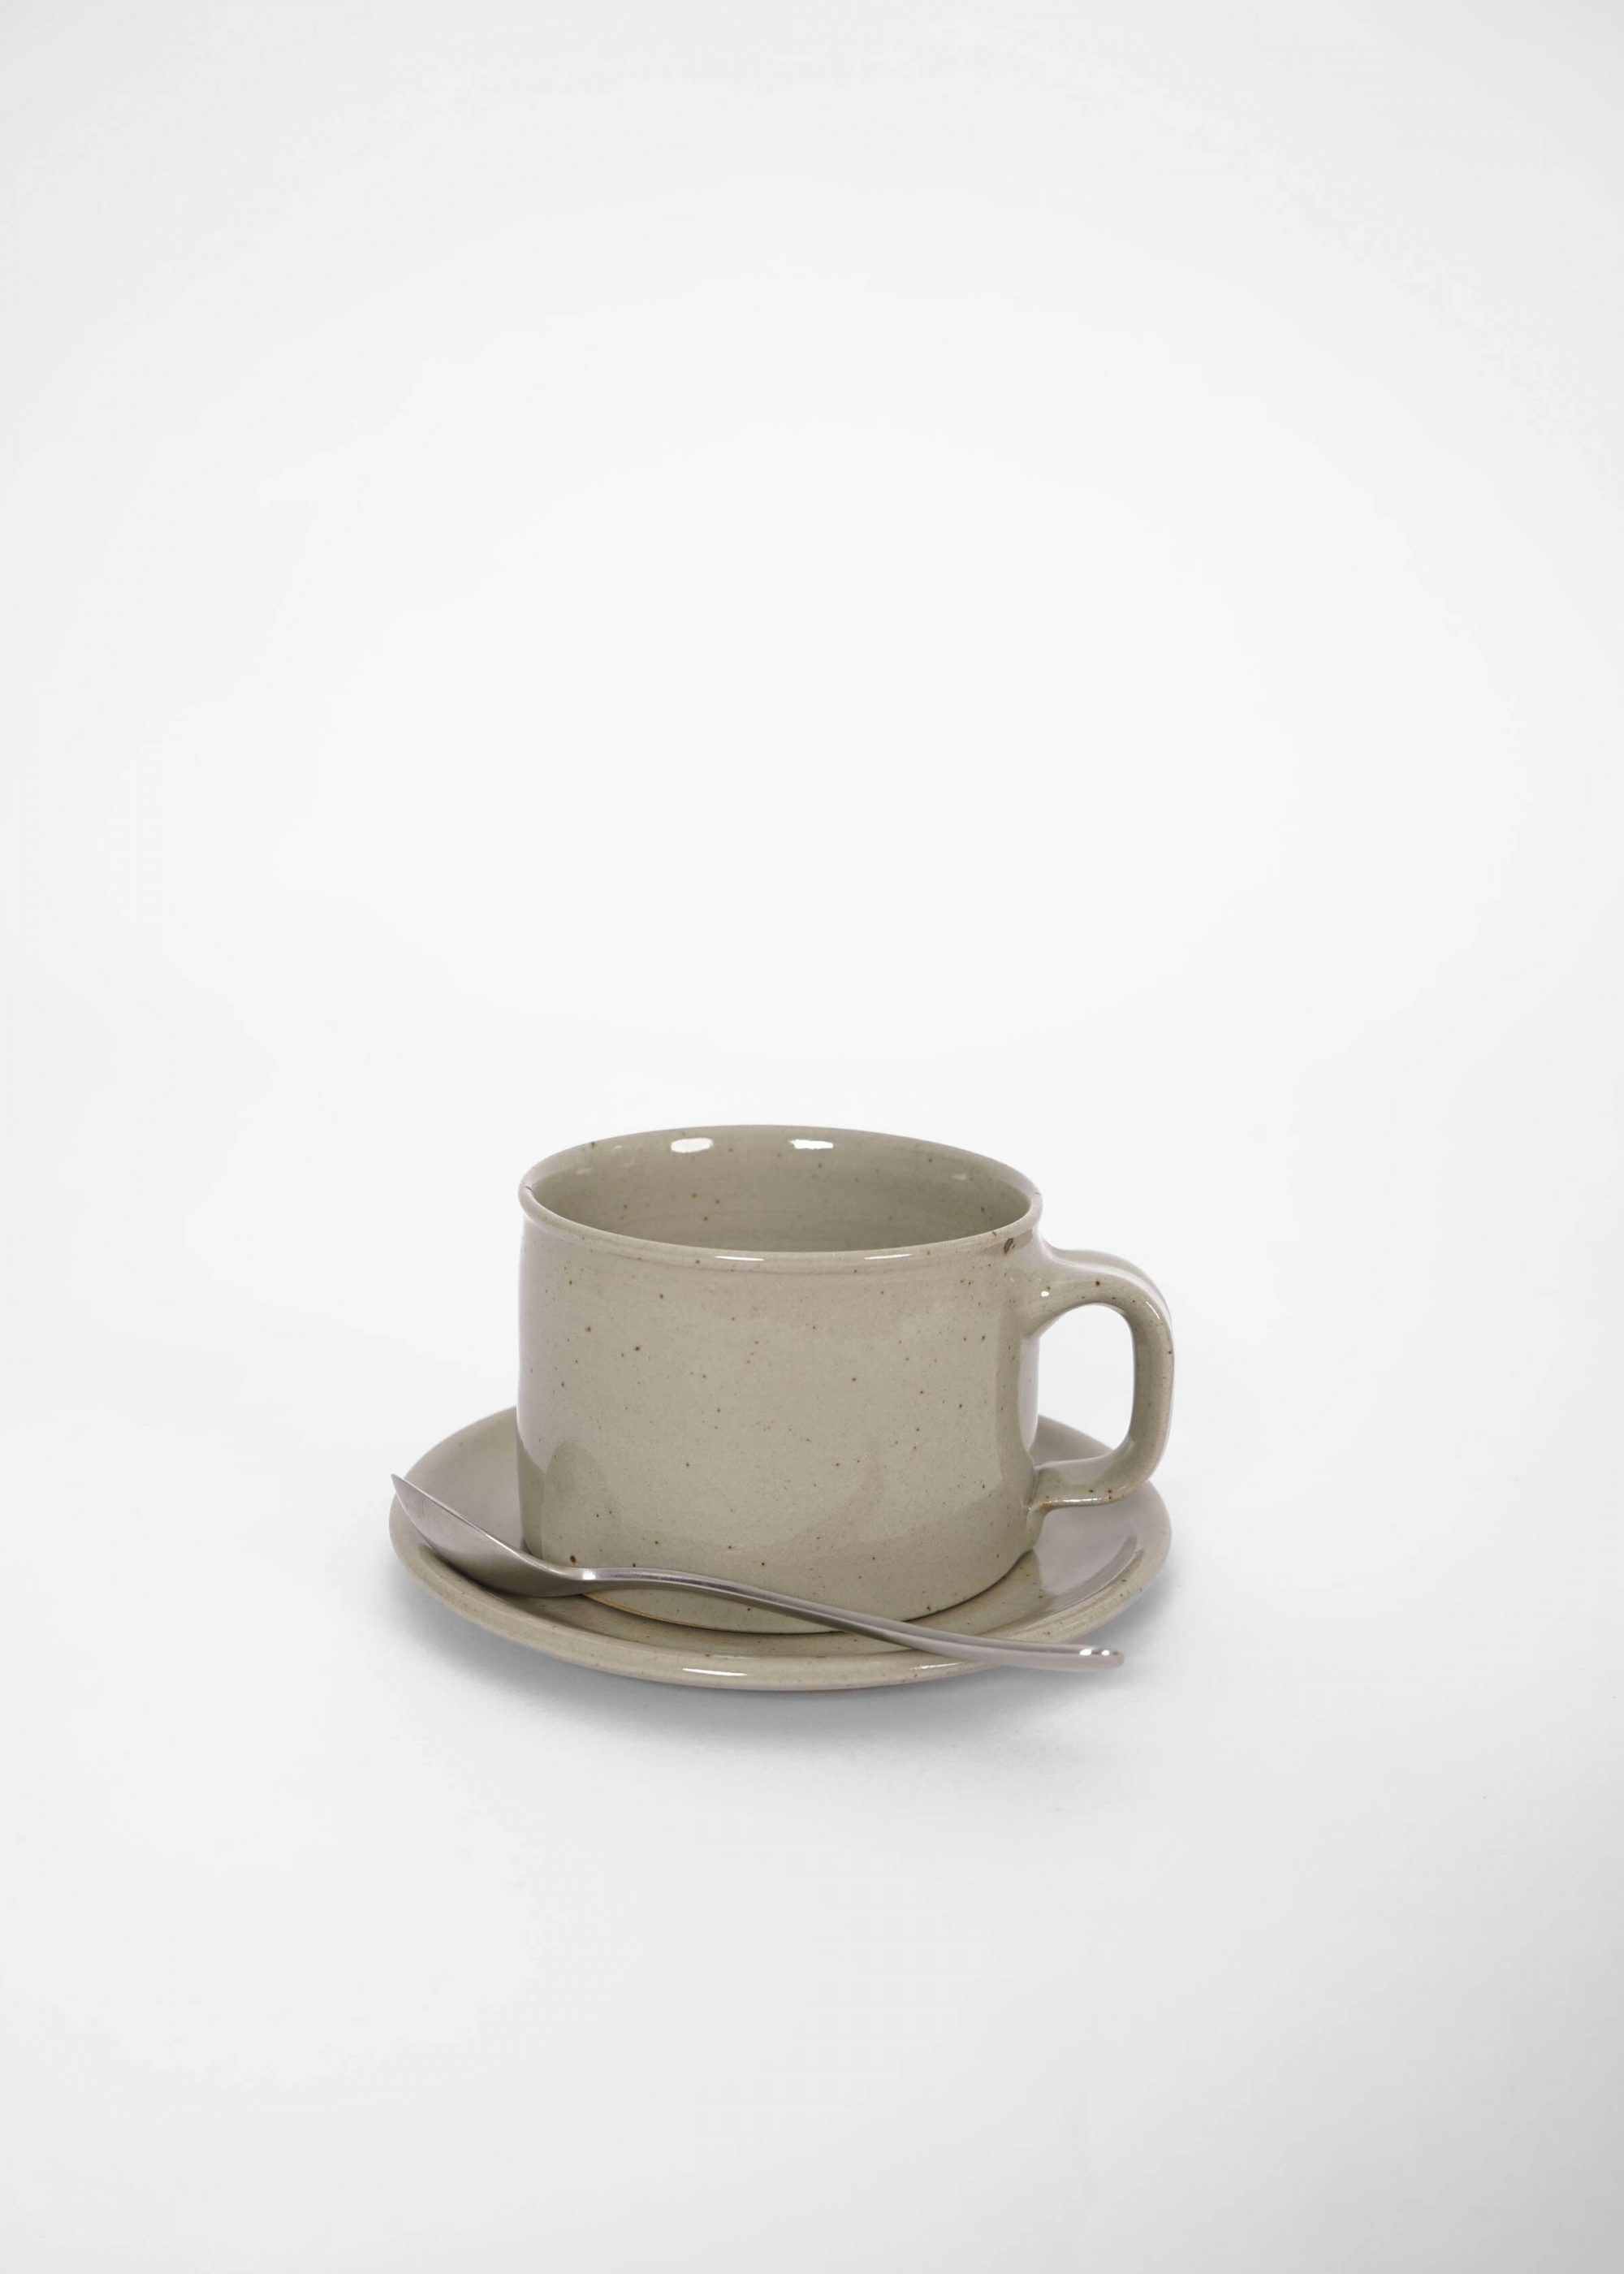 Product image for N° ICSB2 BRUTAL Mug